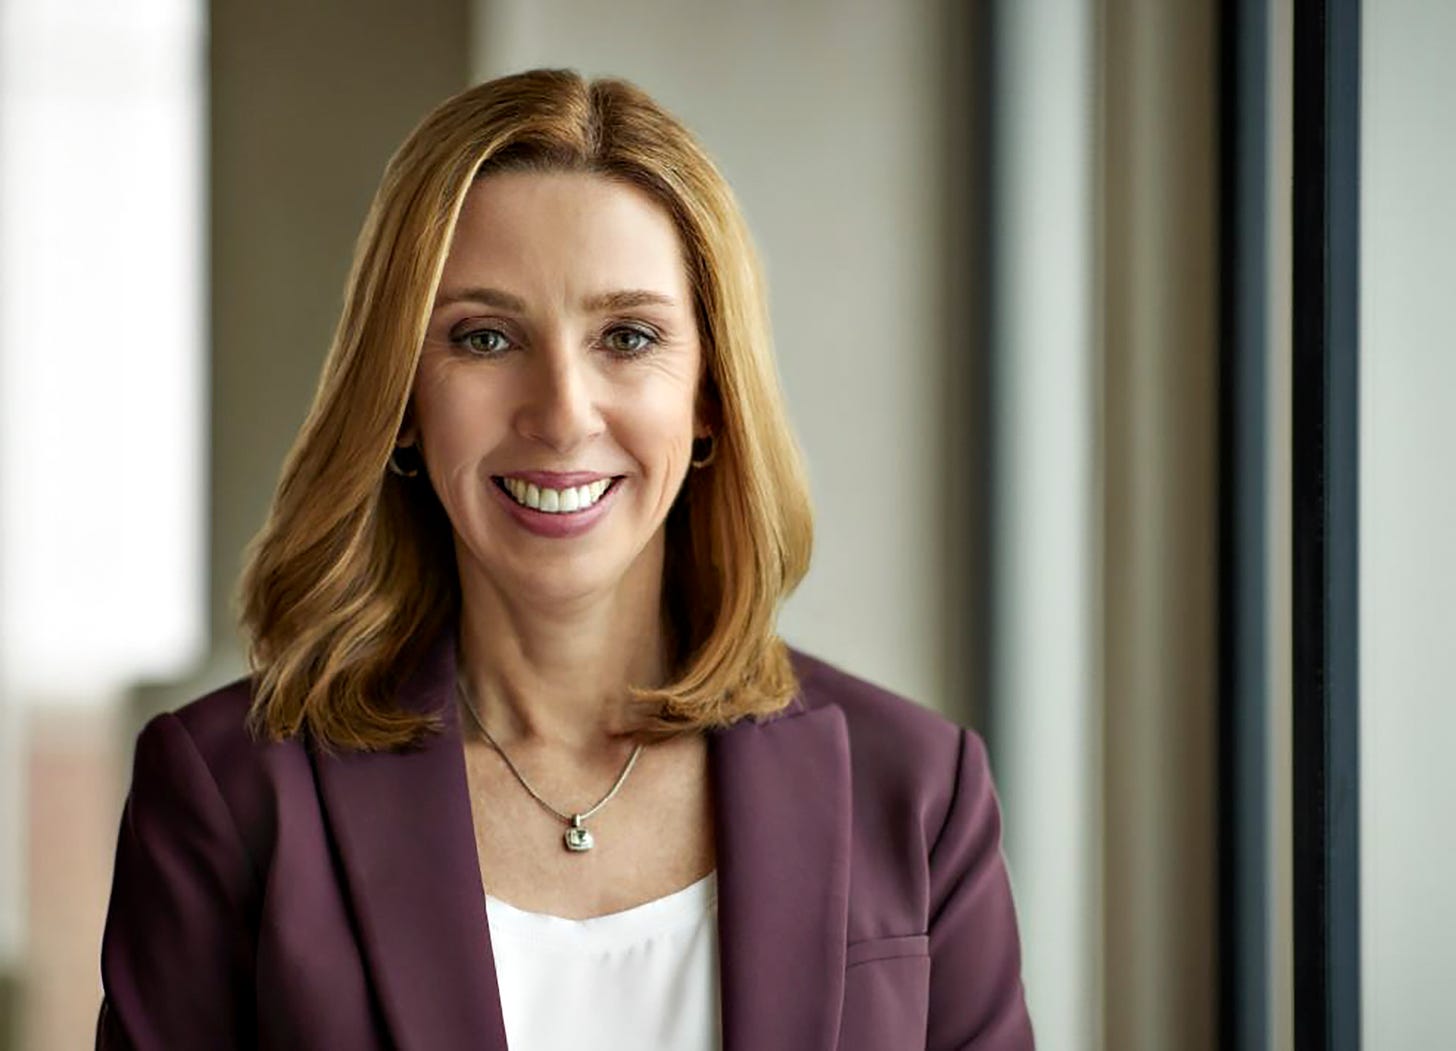 Dick's Sporting Goods Names Lauren Hobart as Next CEO - Bloomberg